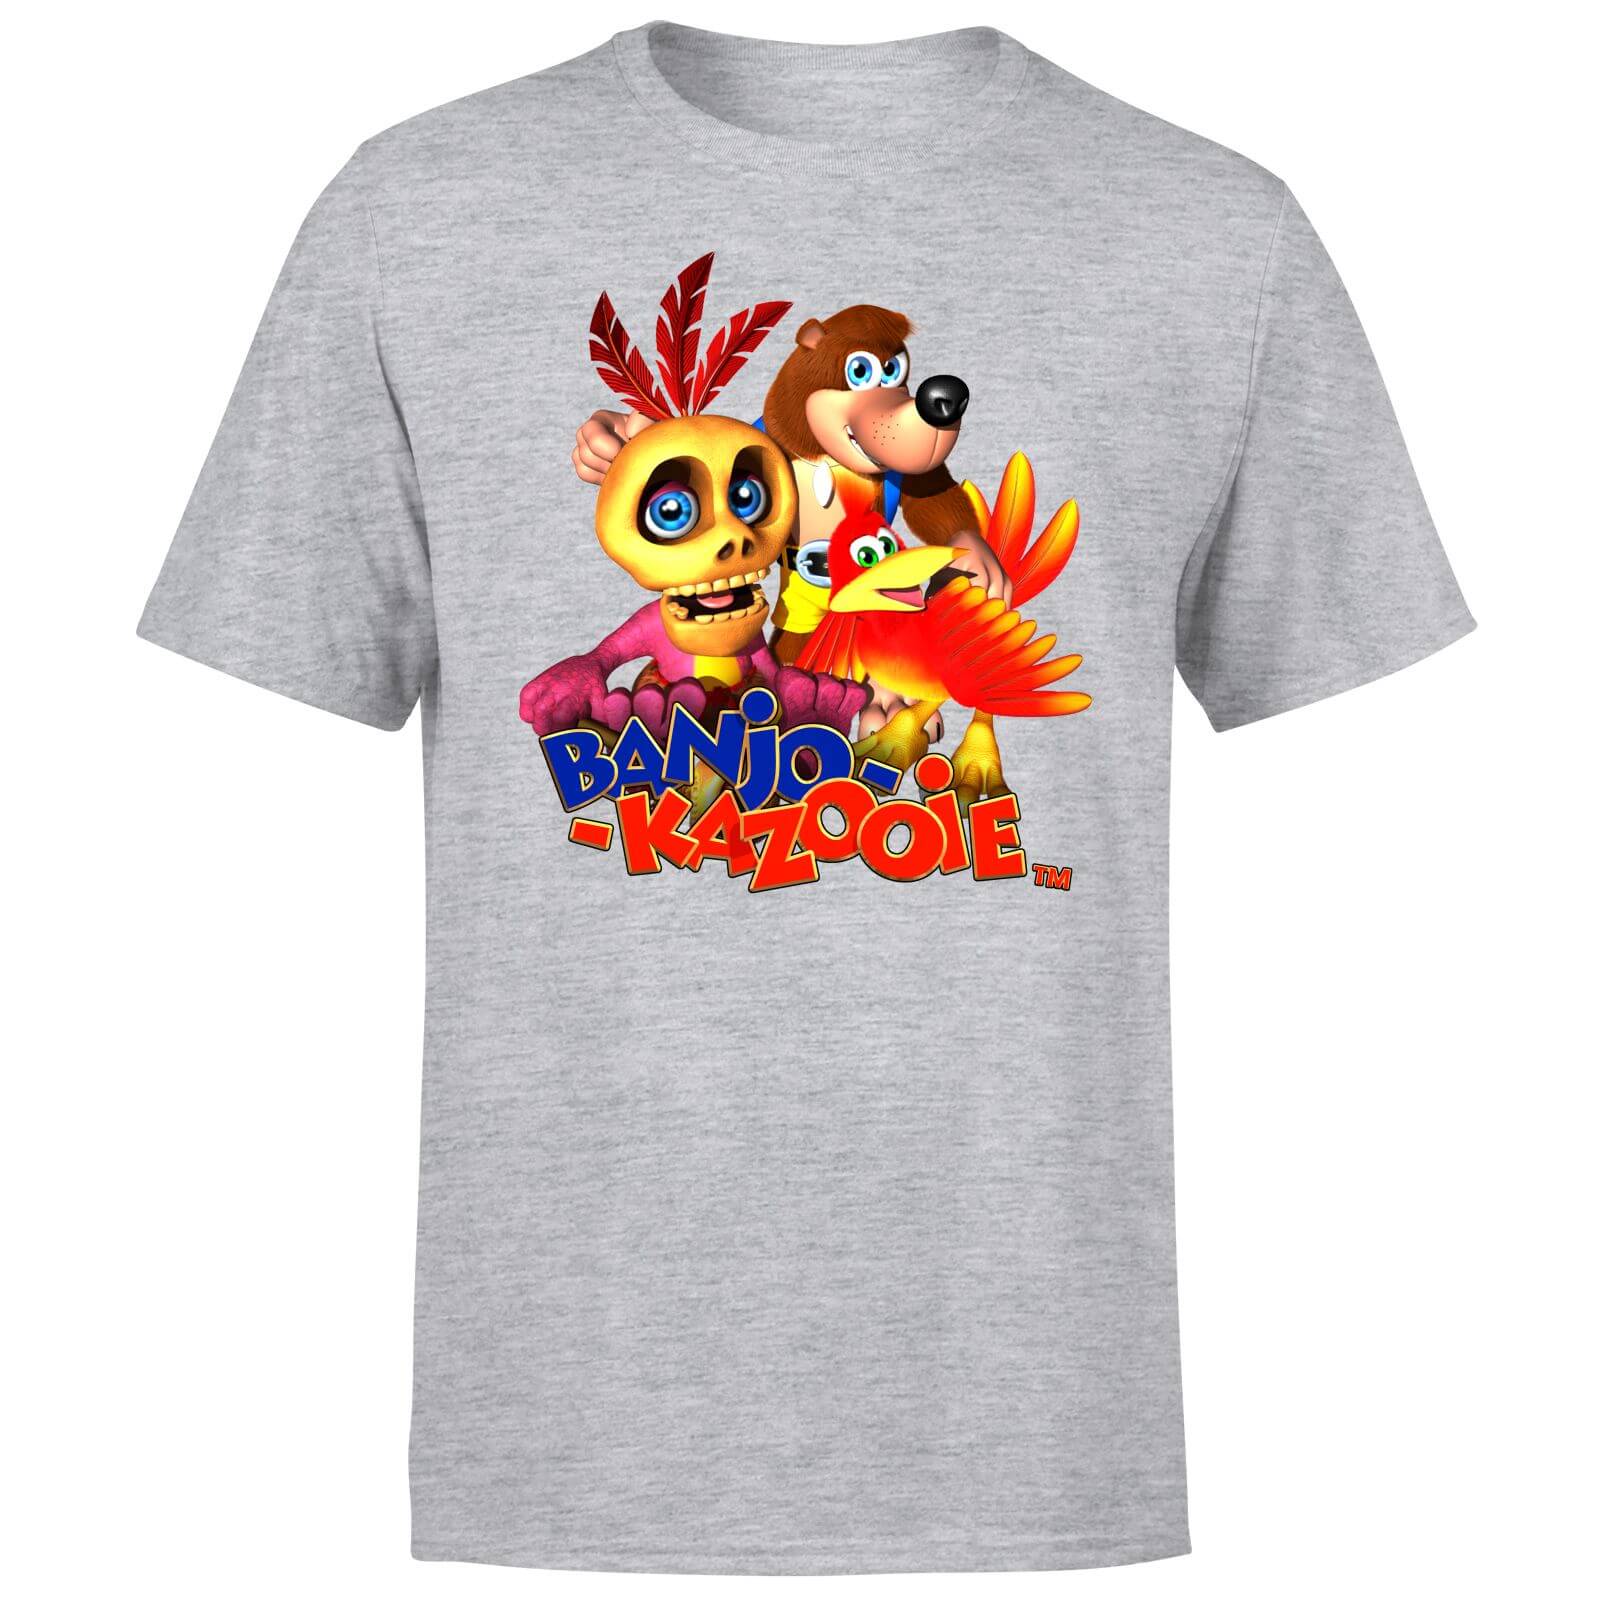 Banjo Kazooie Group T-Shirt - Grey - S - Grey